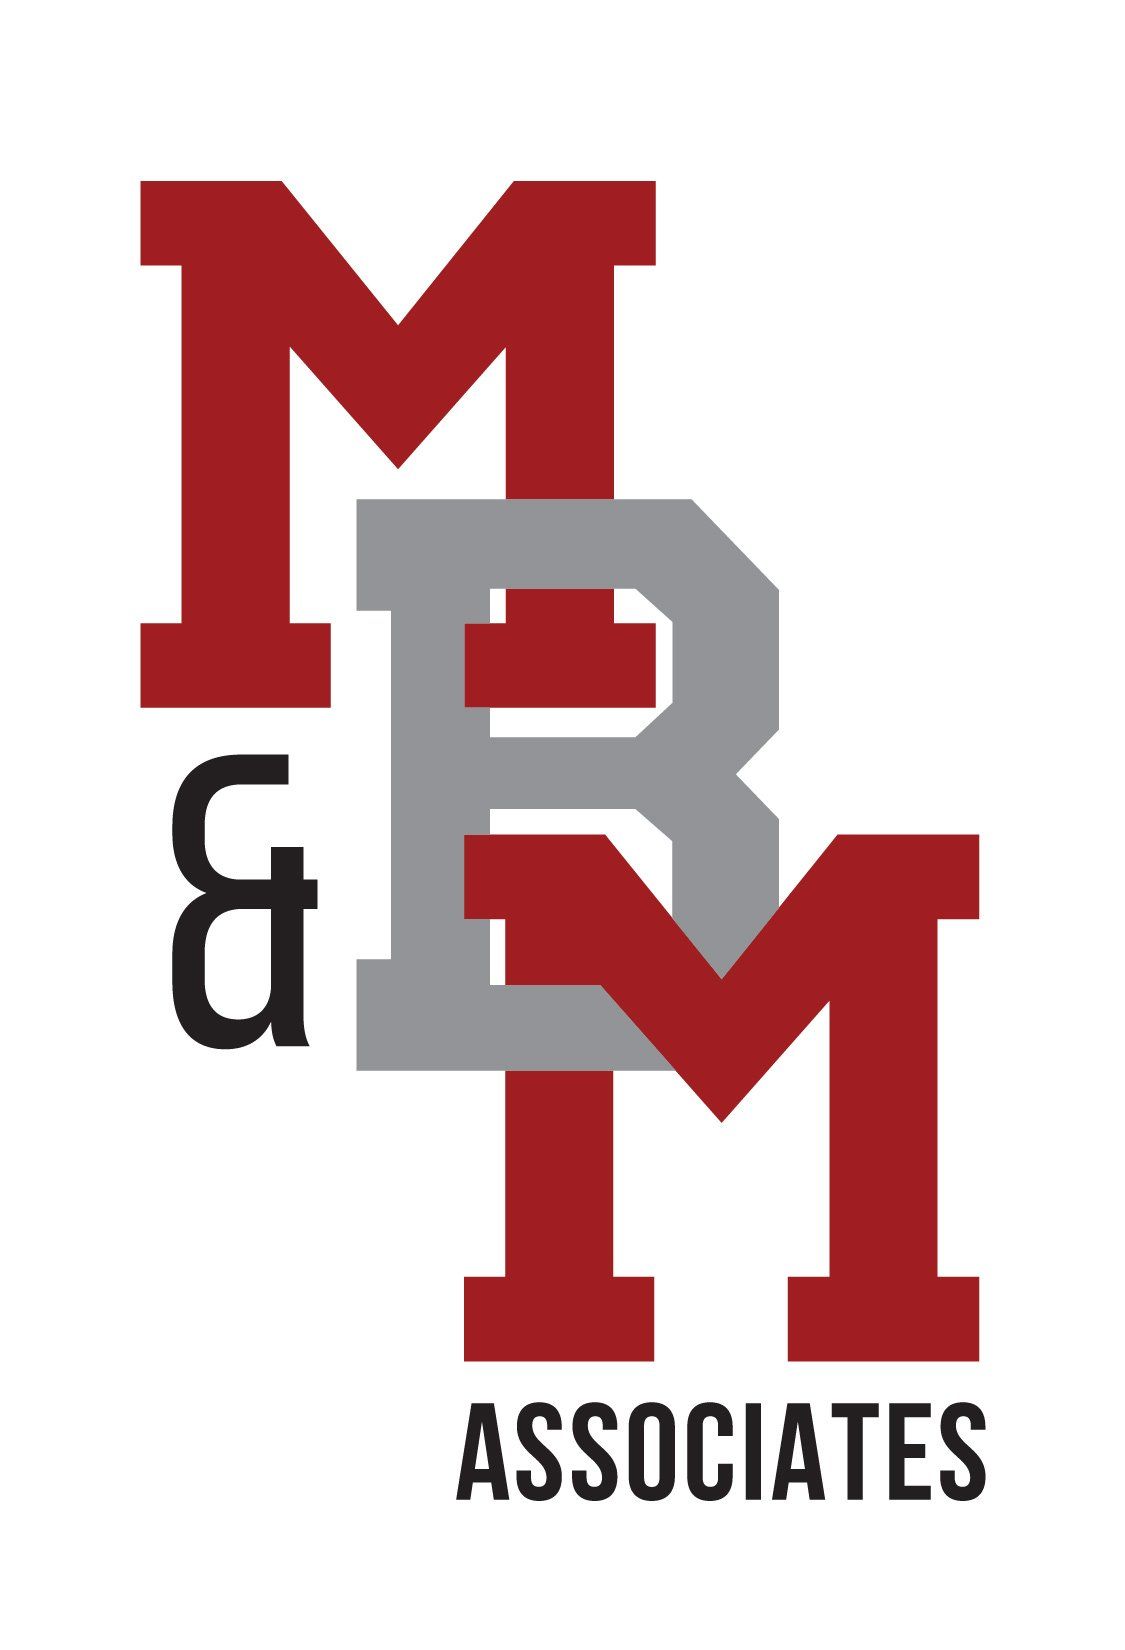 mbm and associates logo